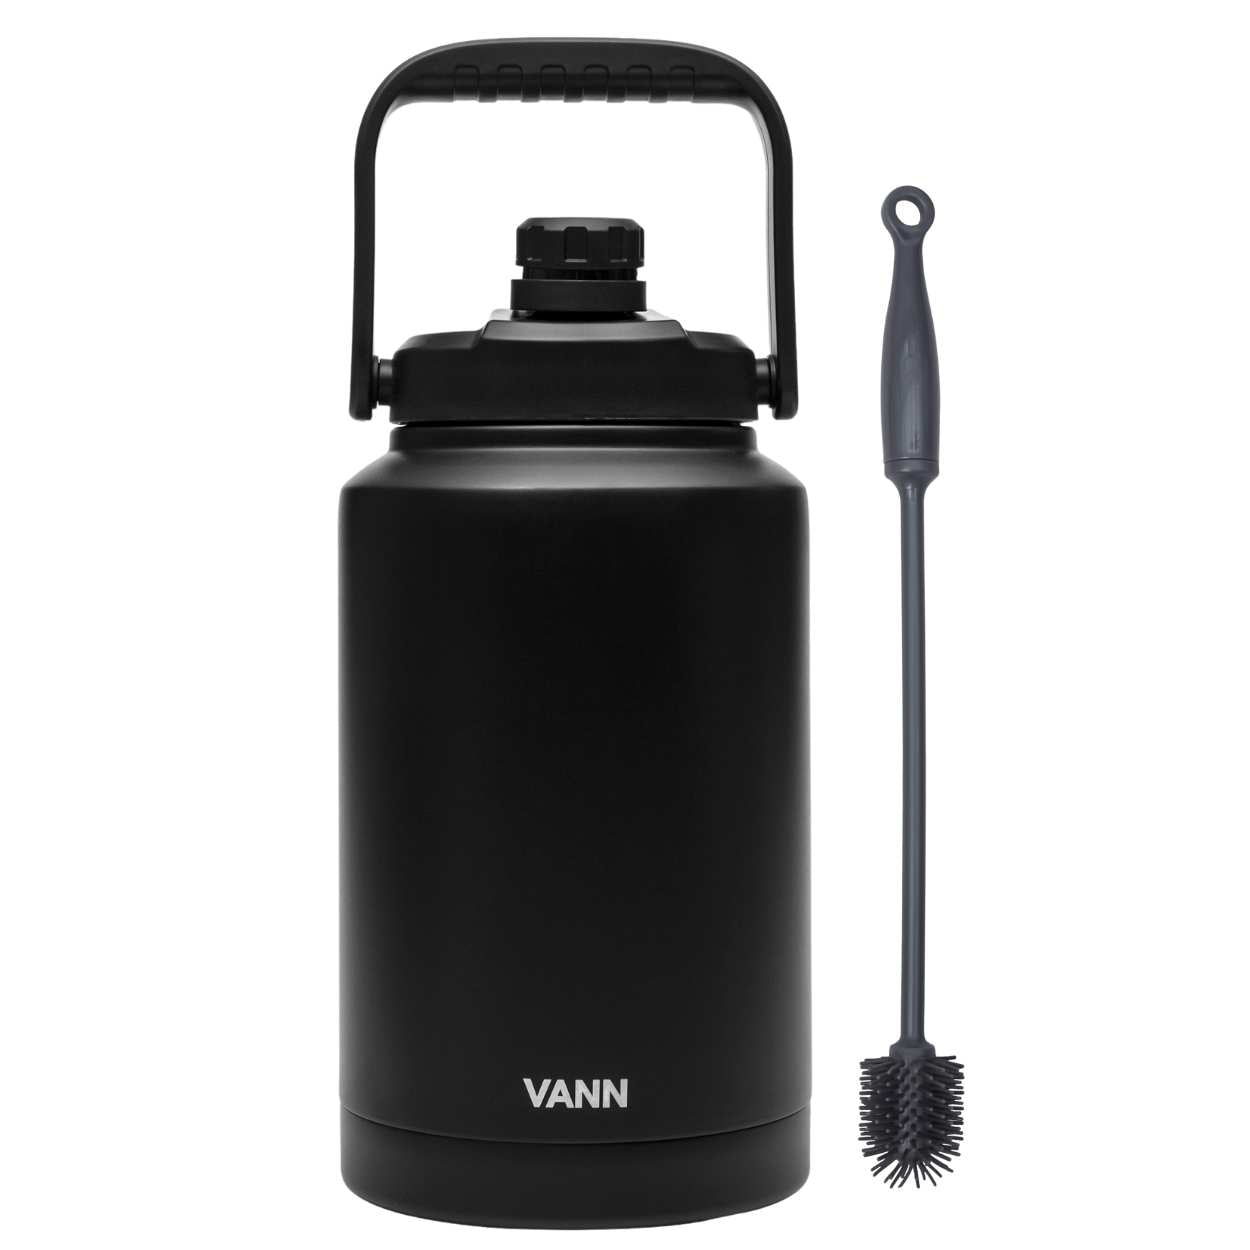 Water jug - Thermoskan 3.8 Liter